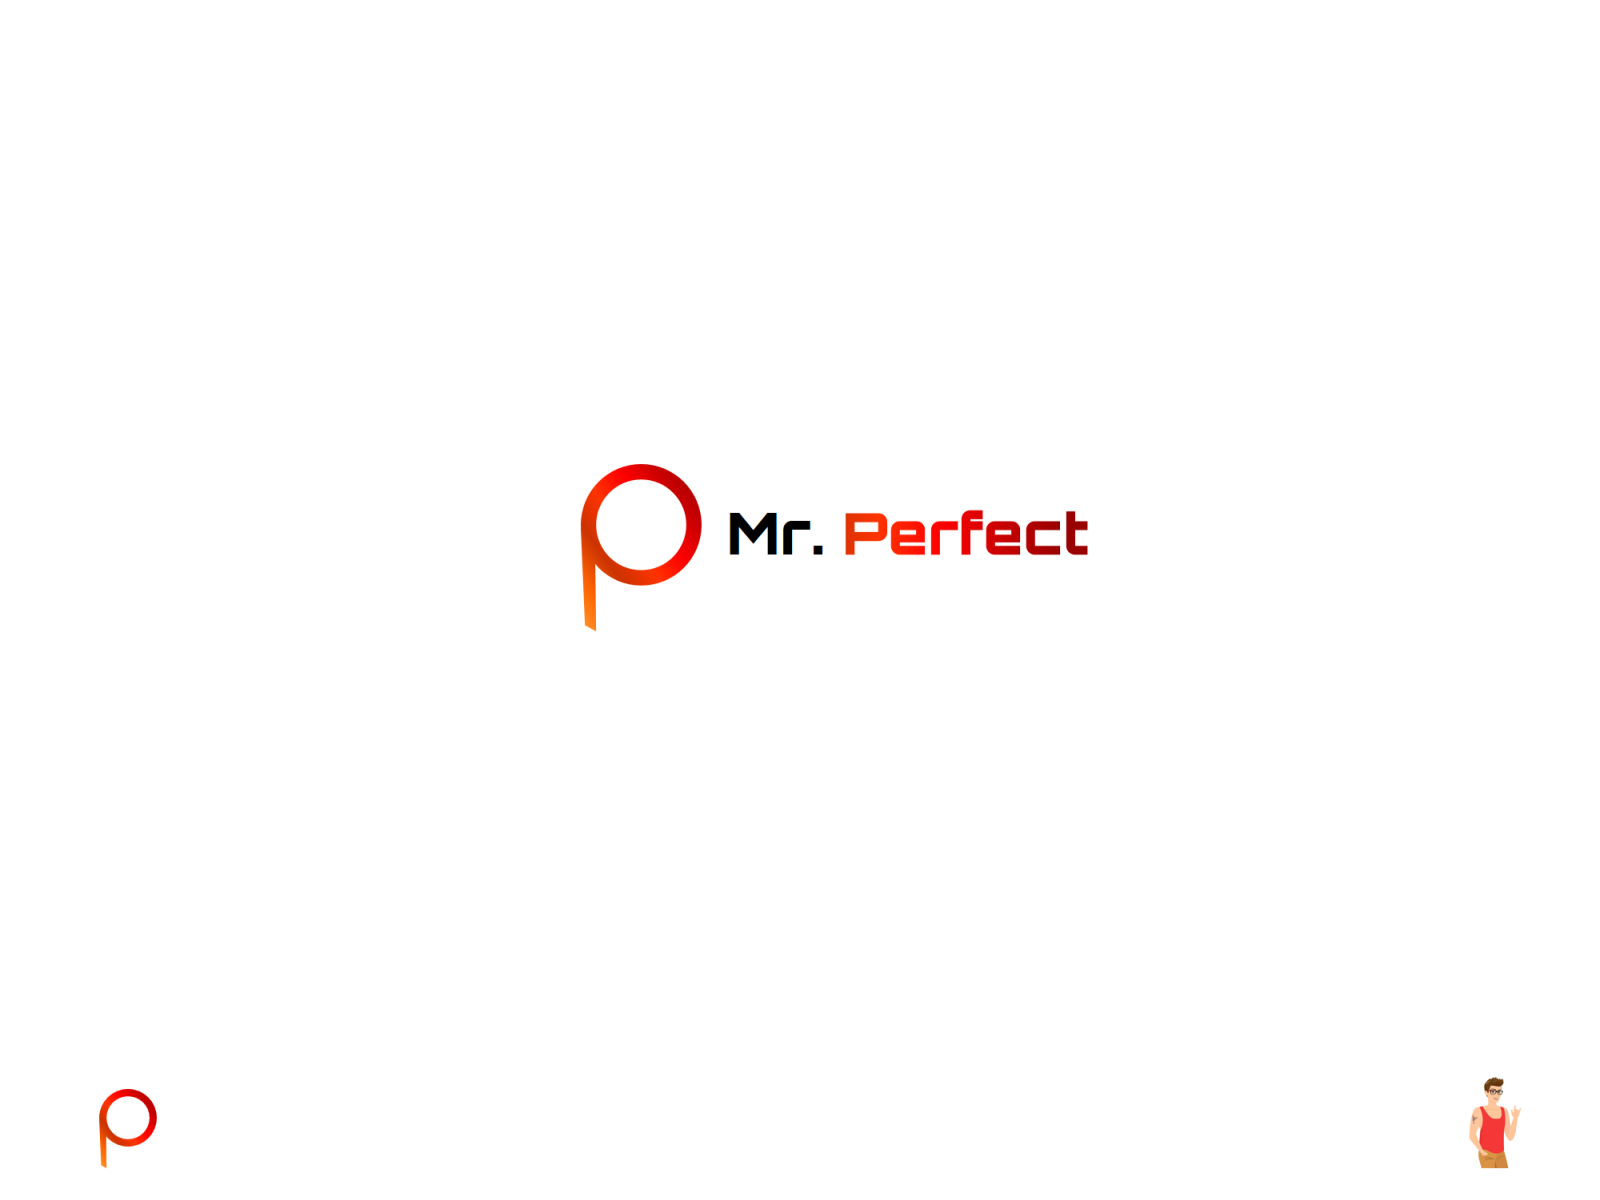 MR. PERFECT - Rayalu, B Srinivasa Trademark Registration